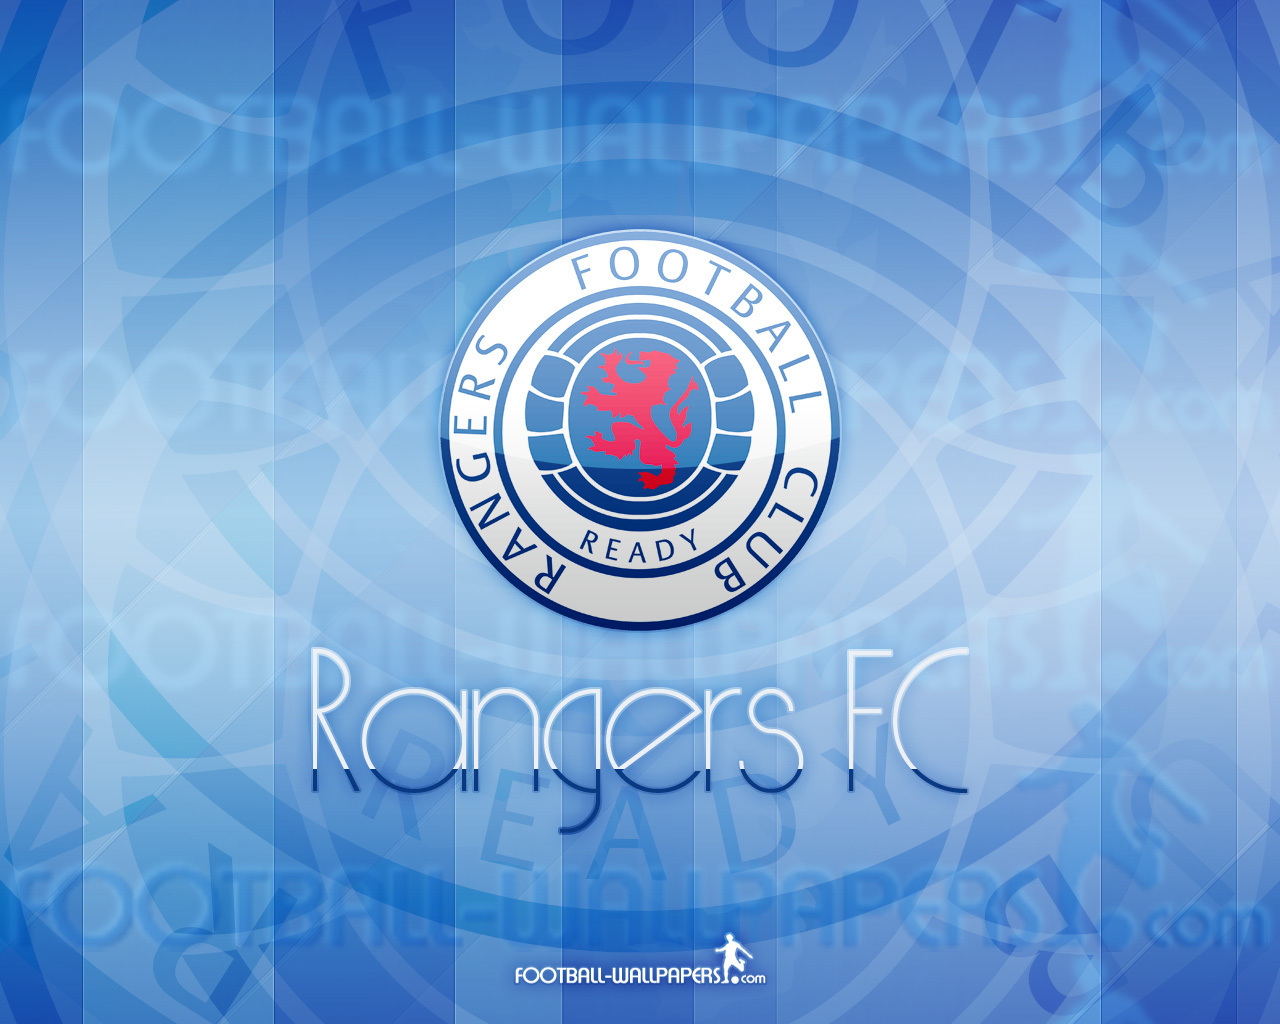 Rangers F C Football Club Wallpaper